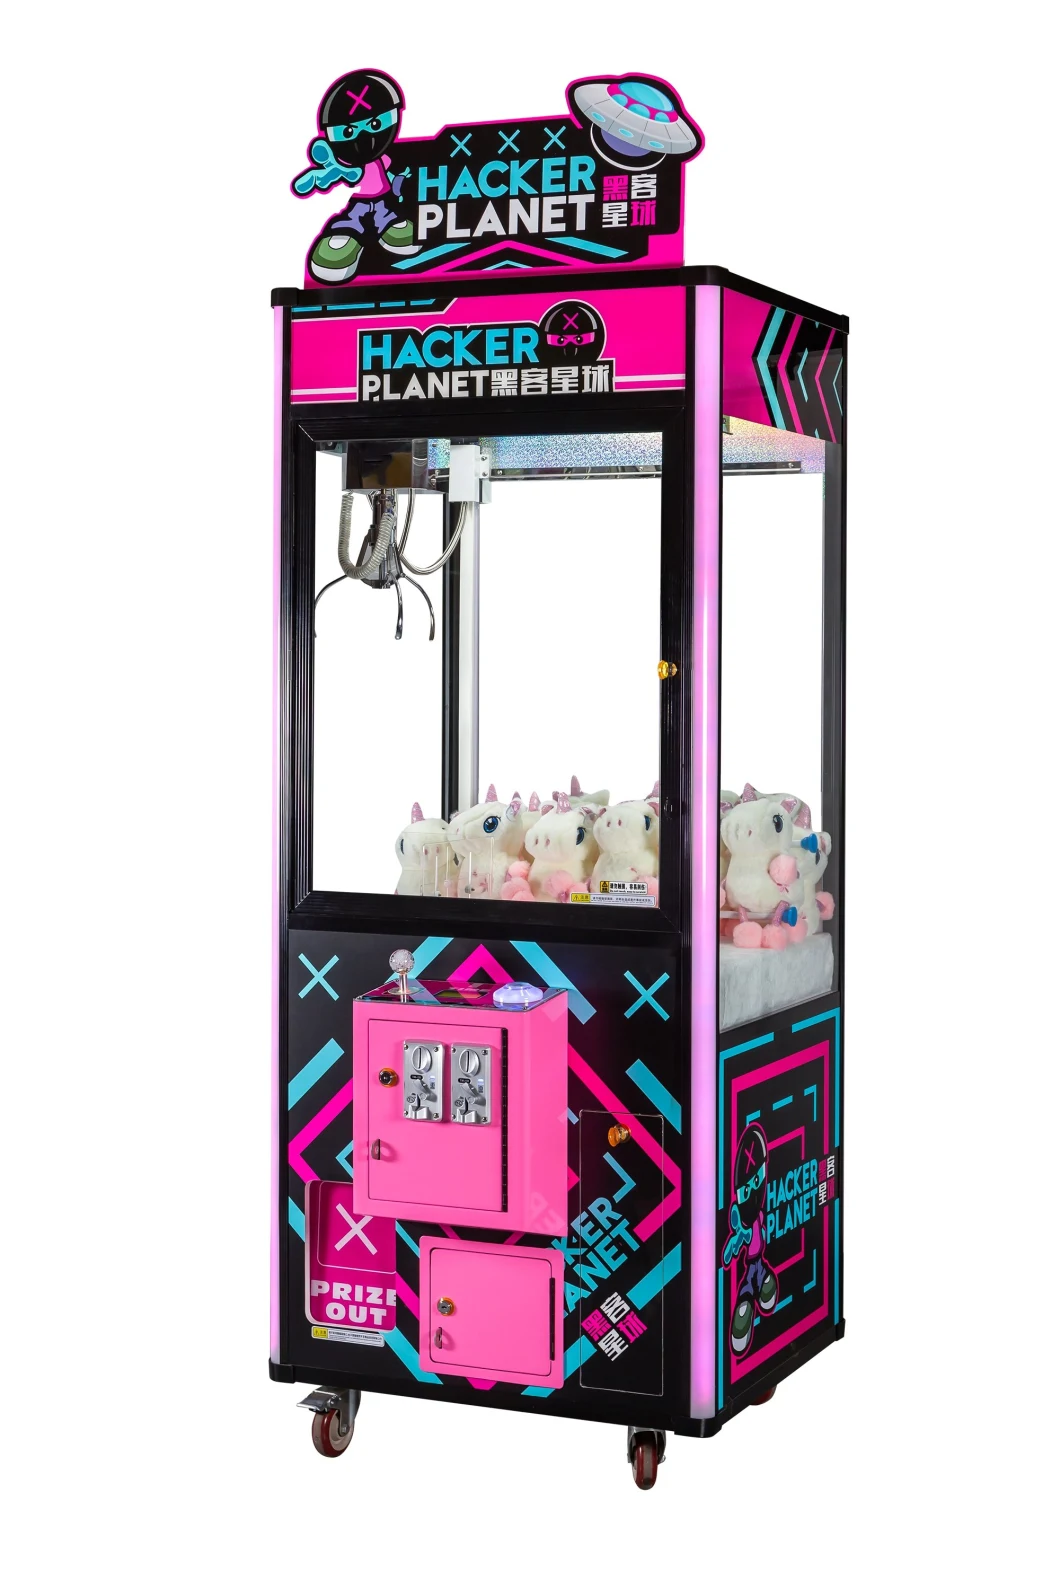 Hacker Planet/Prize/Gift/Toy Vending/Price/Vending/Amusement/Arcade/Crane Claw/Toy Crane/Arcade Claw/Claw Crane /Claw/Crane/Game Machine